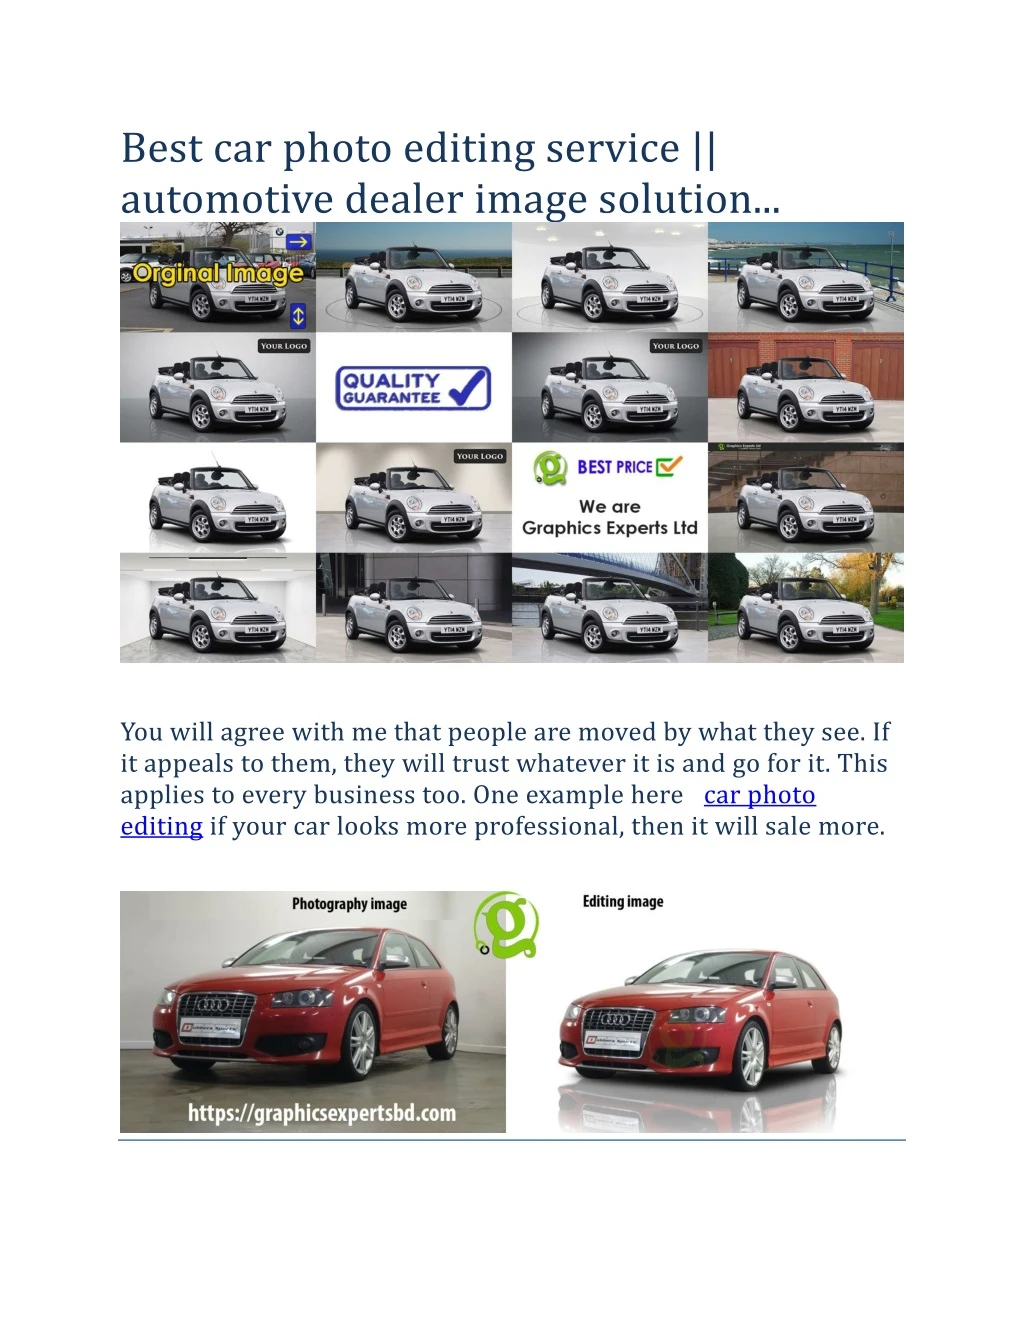 best car photo editing service automotive dealer